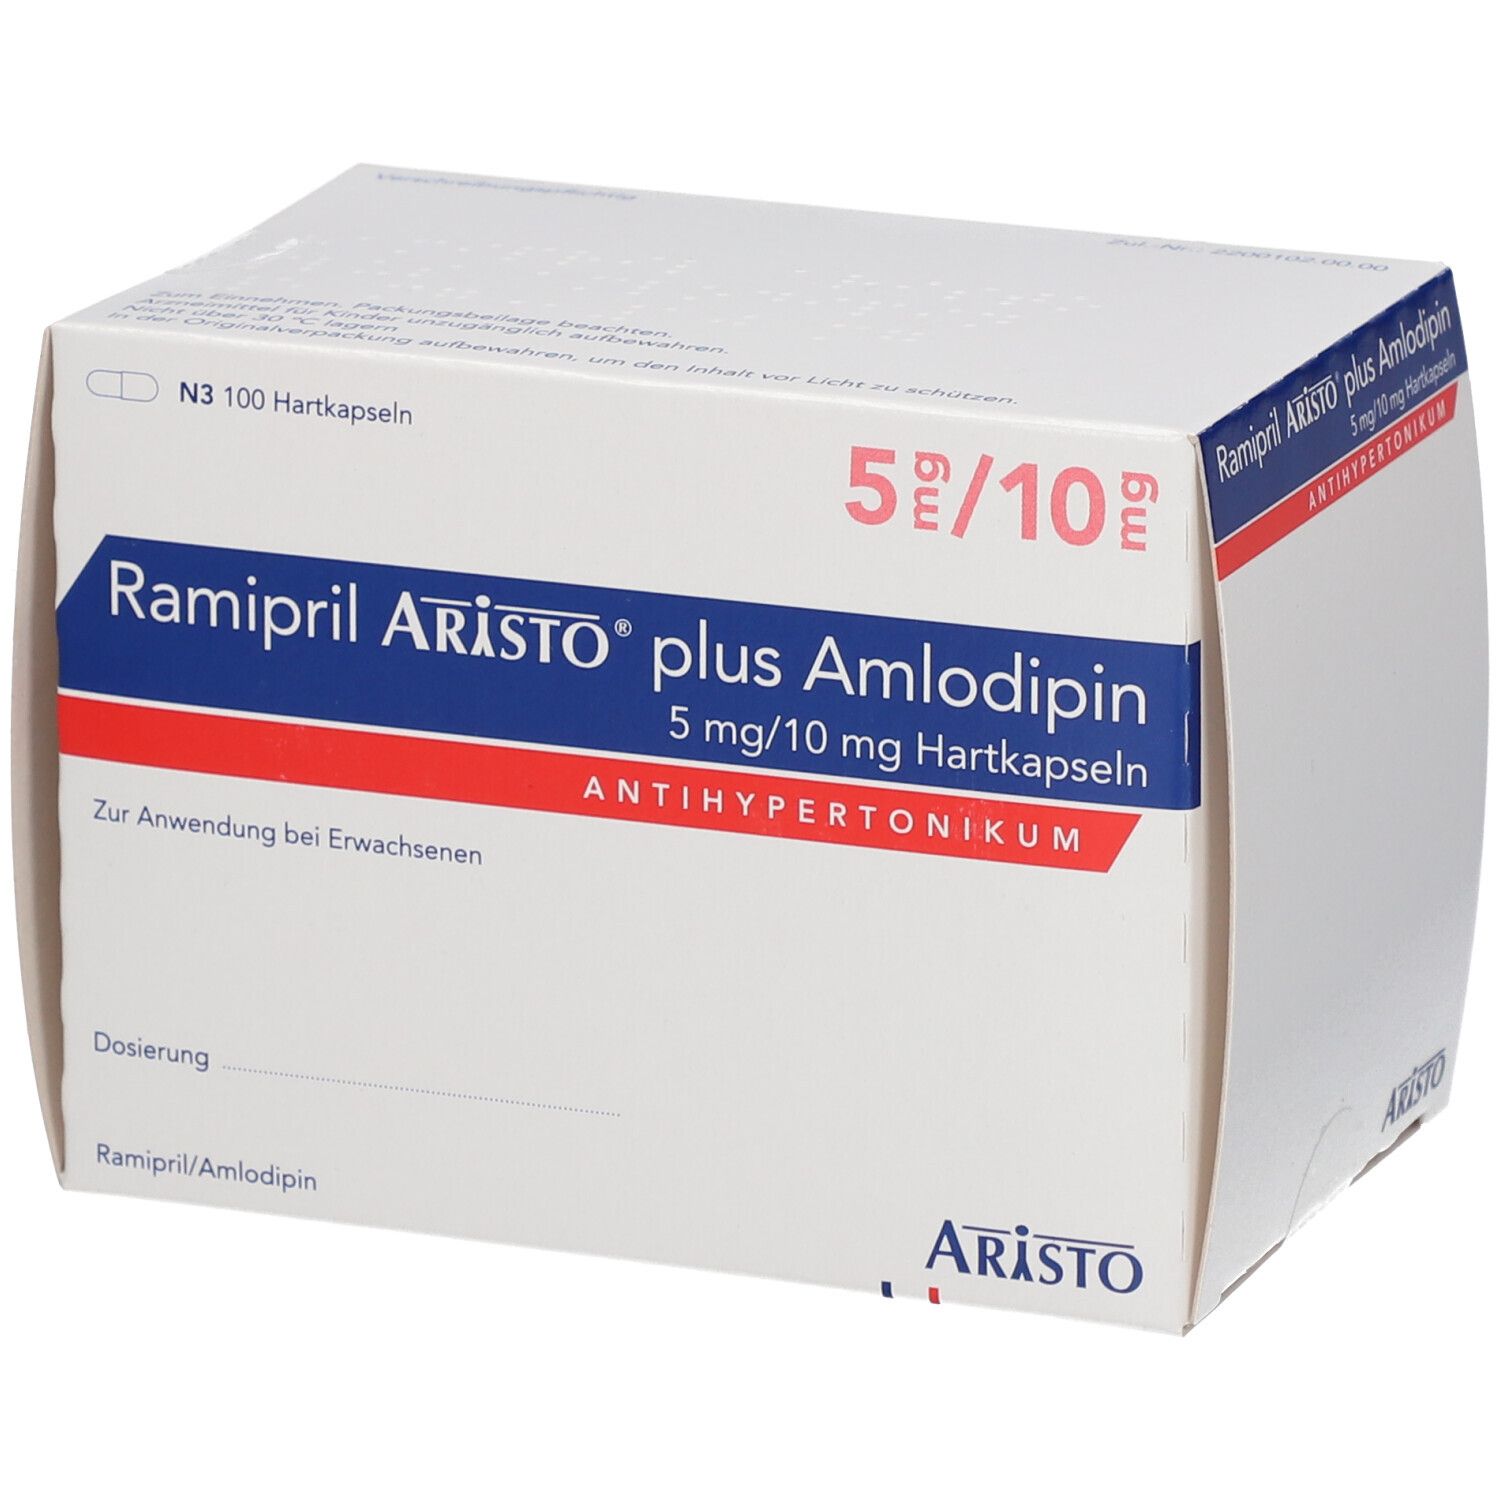 Ramipril Aristo® plus Amlodipin 5 mg/10 mg